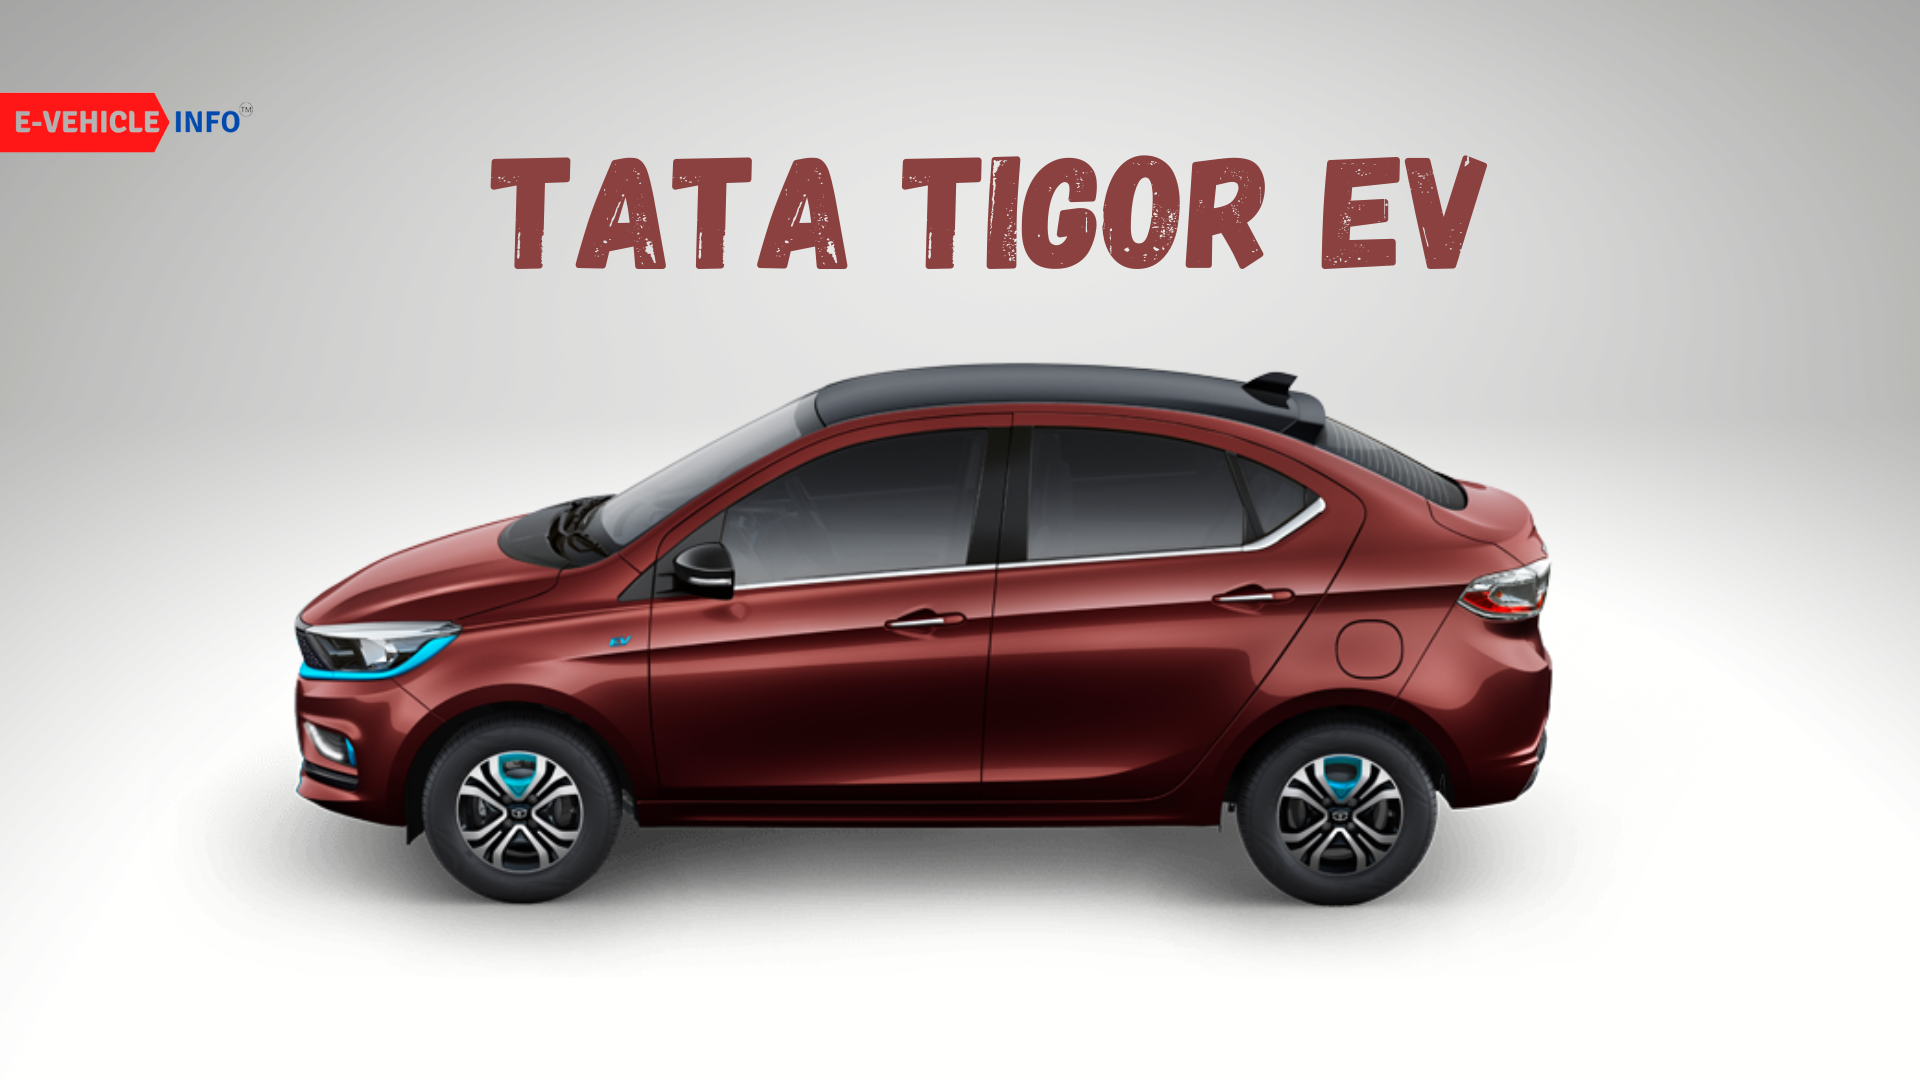 New Tata Tigor EV Price, Range, Battery, and Specifications